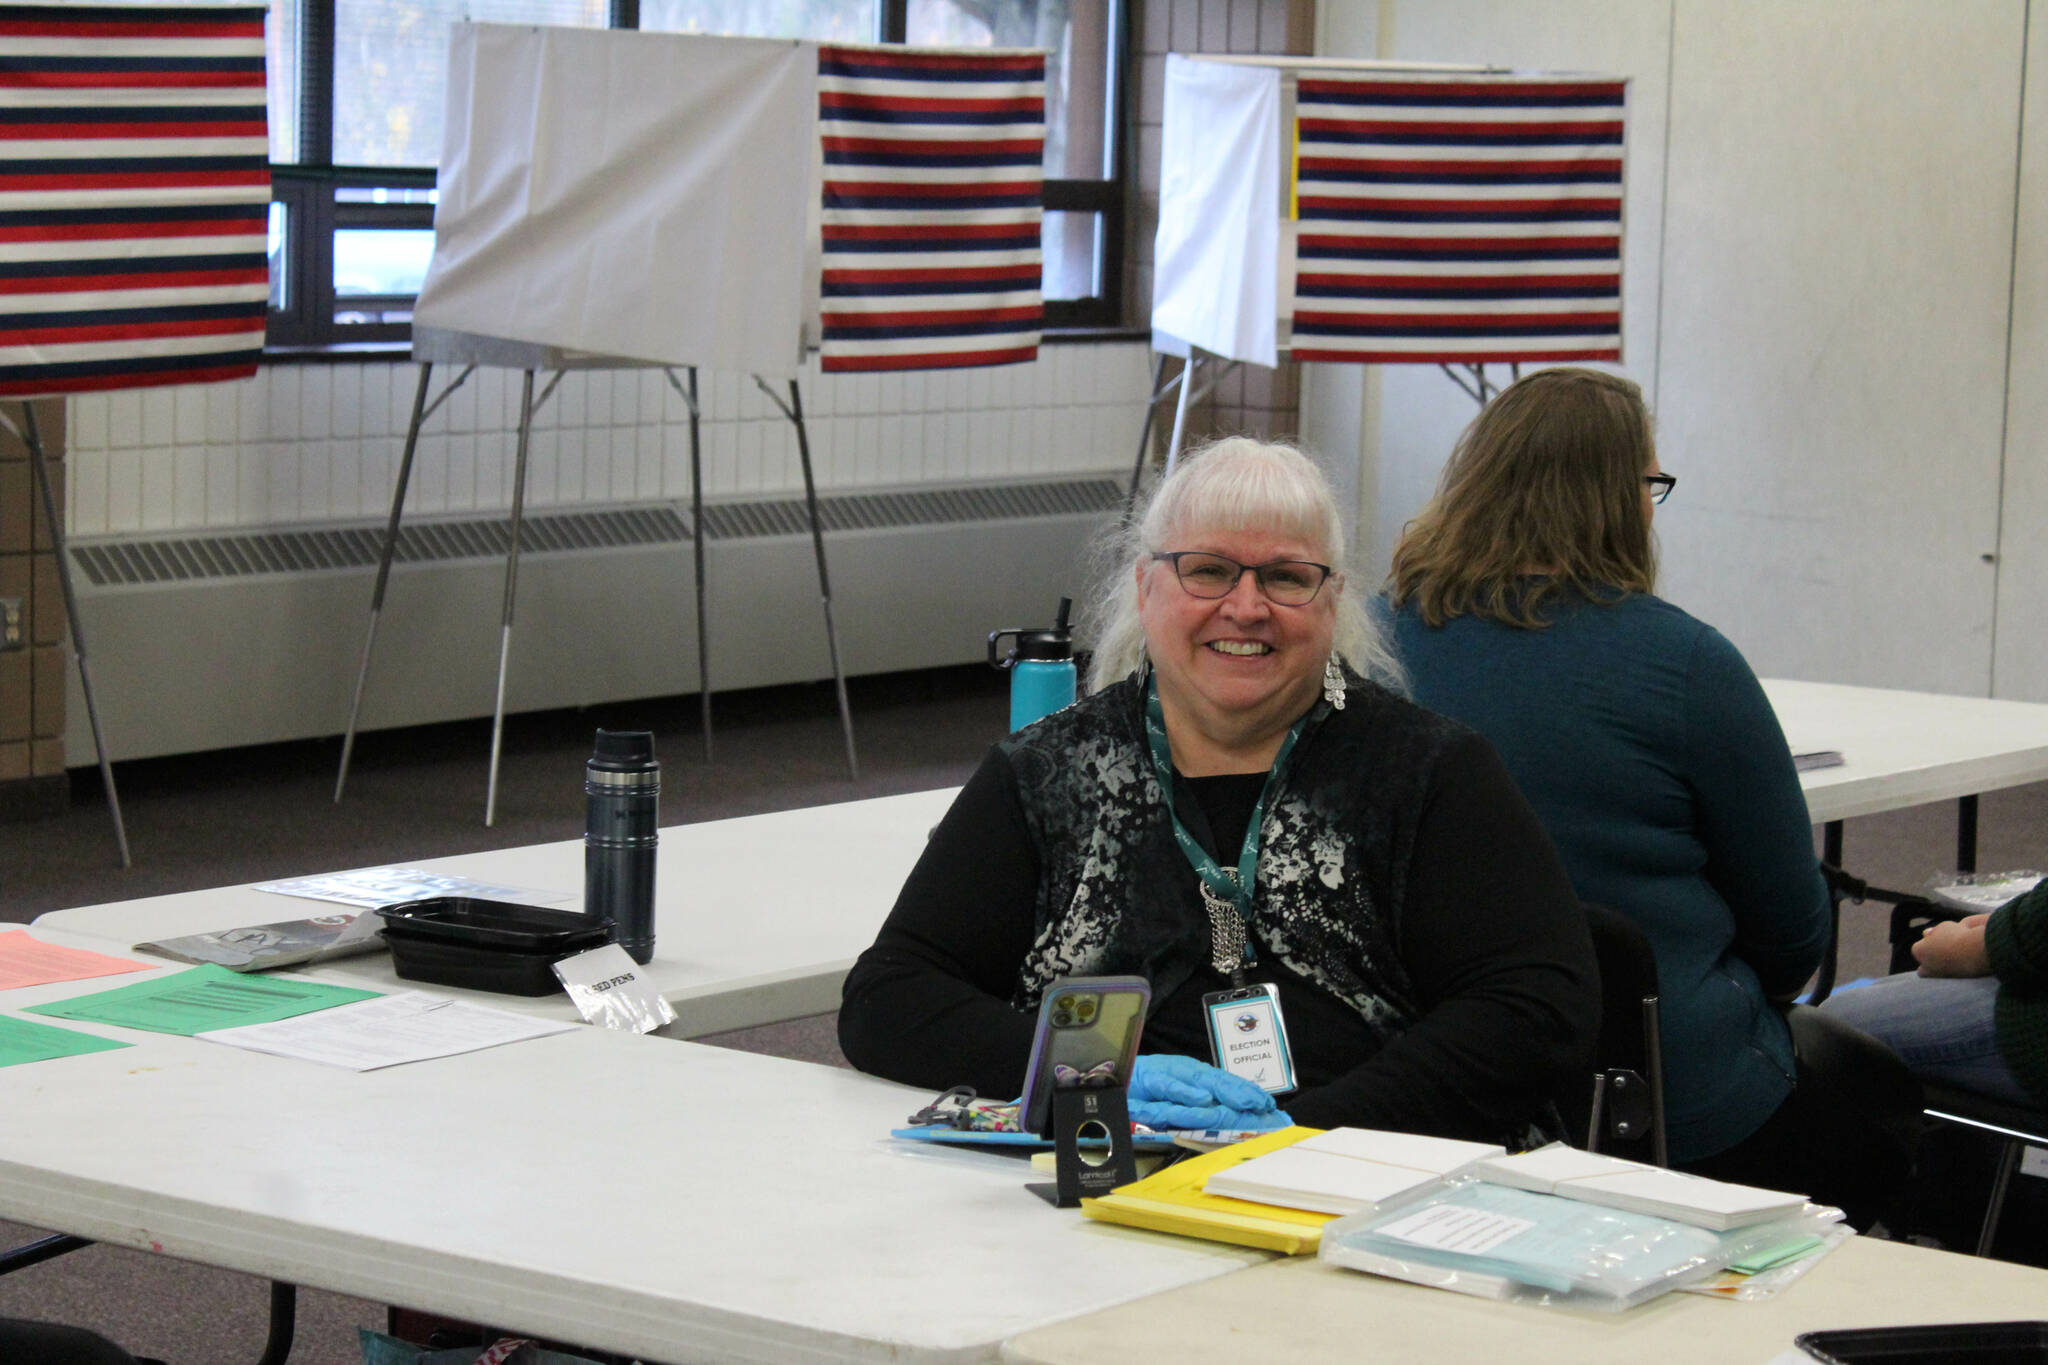 Kathy Carson helps run a polling location at the Soldotna Regional Sports Complex on Tuesday, Oct. 4, 2022, in Soldotna, Alaska. (Ashlyn O’Hara/Peninsula Clarion)